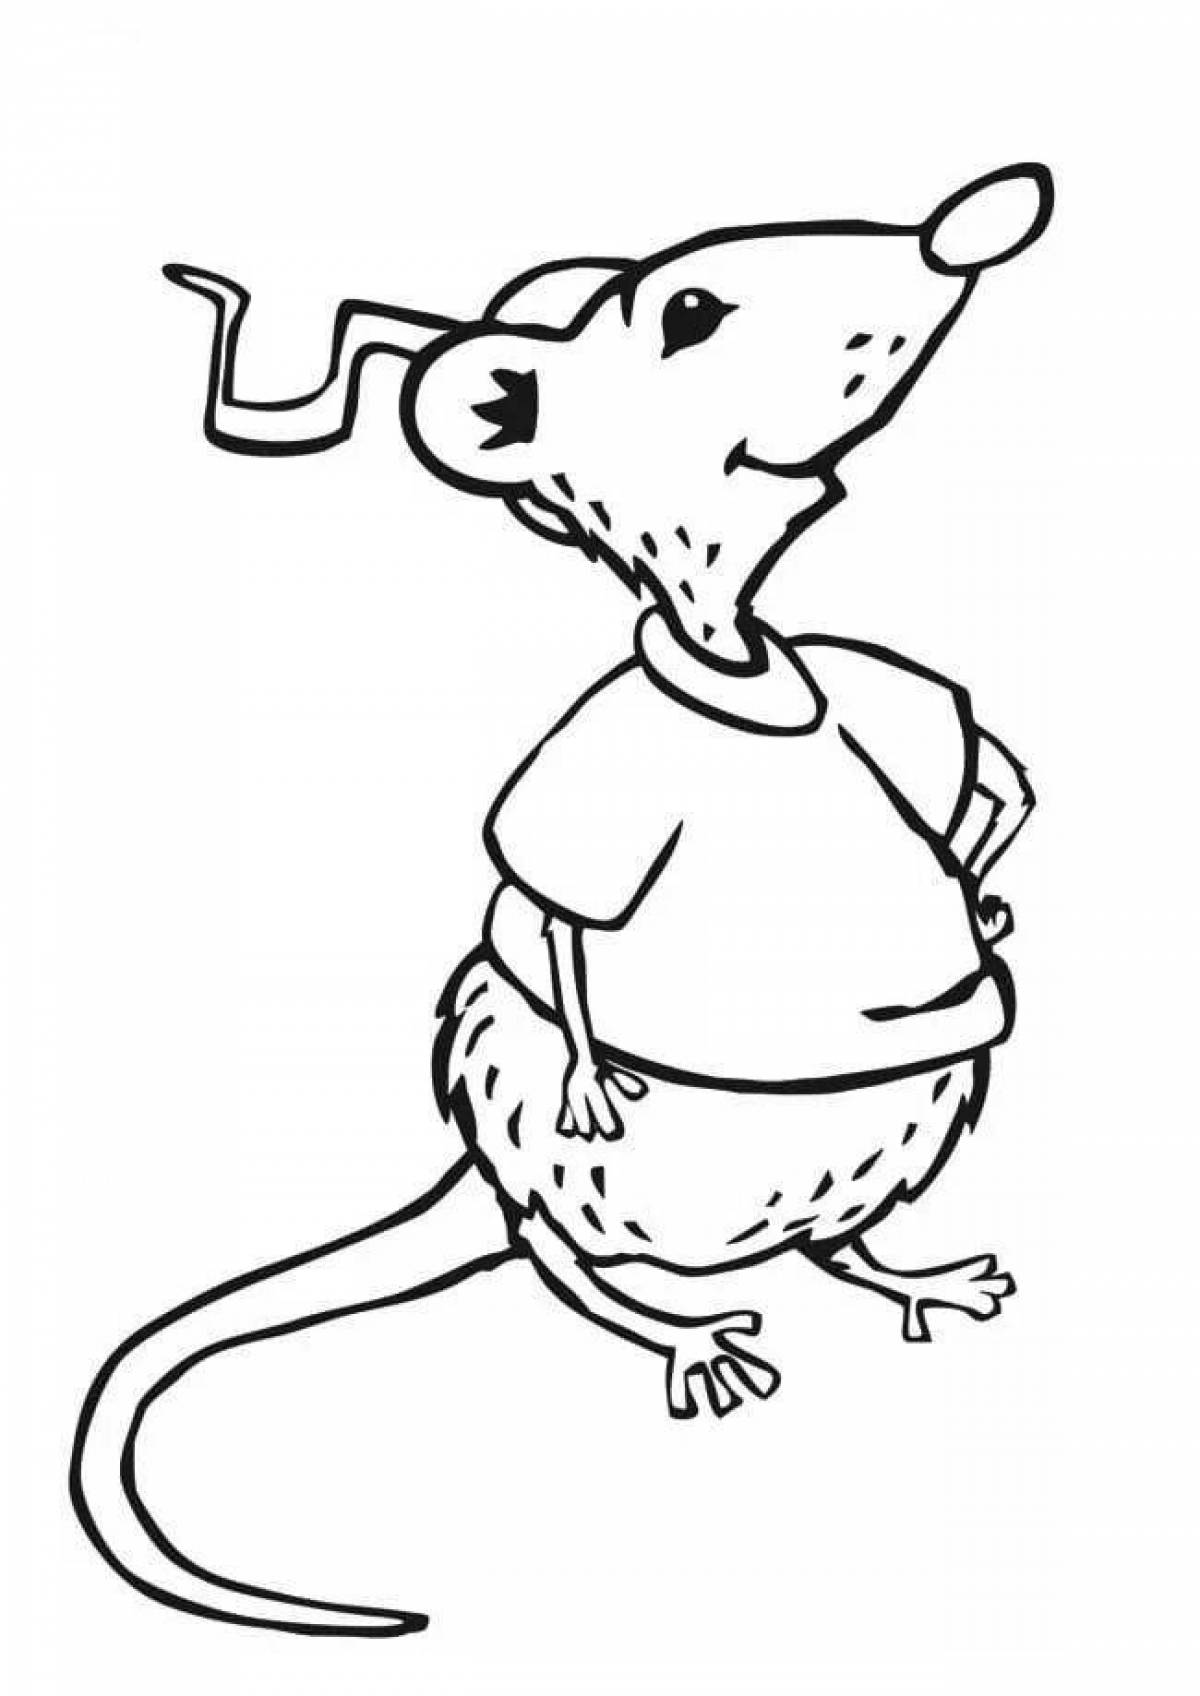 Красочная крыса раскраска для детей